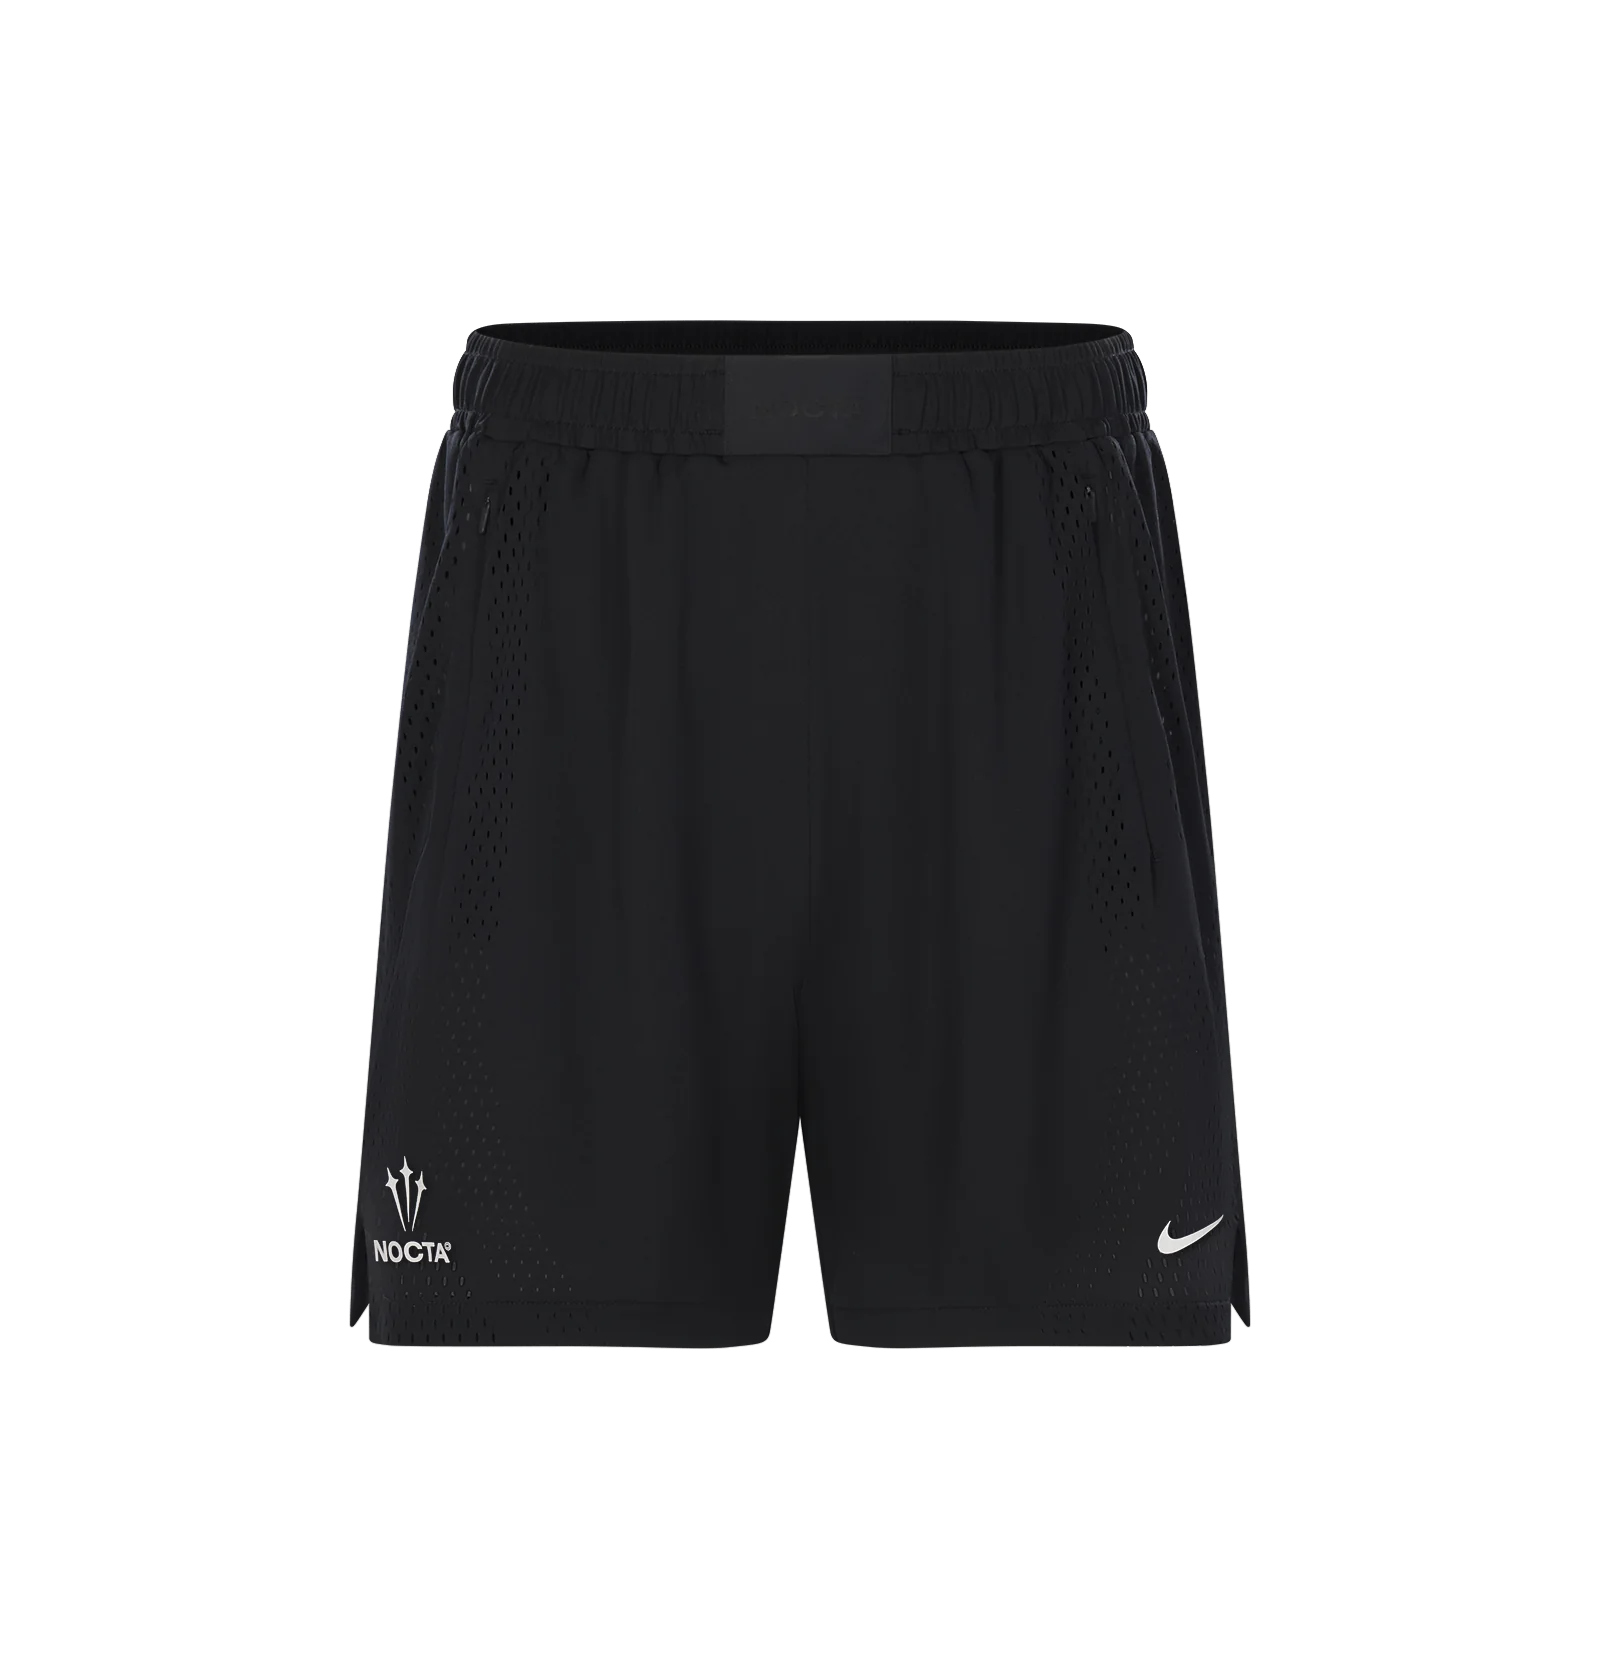 Nike Nocta Shorts Black